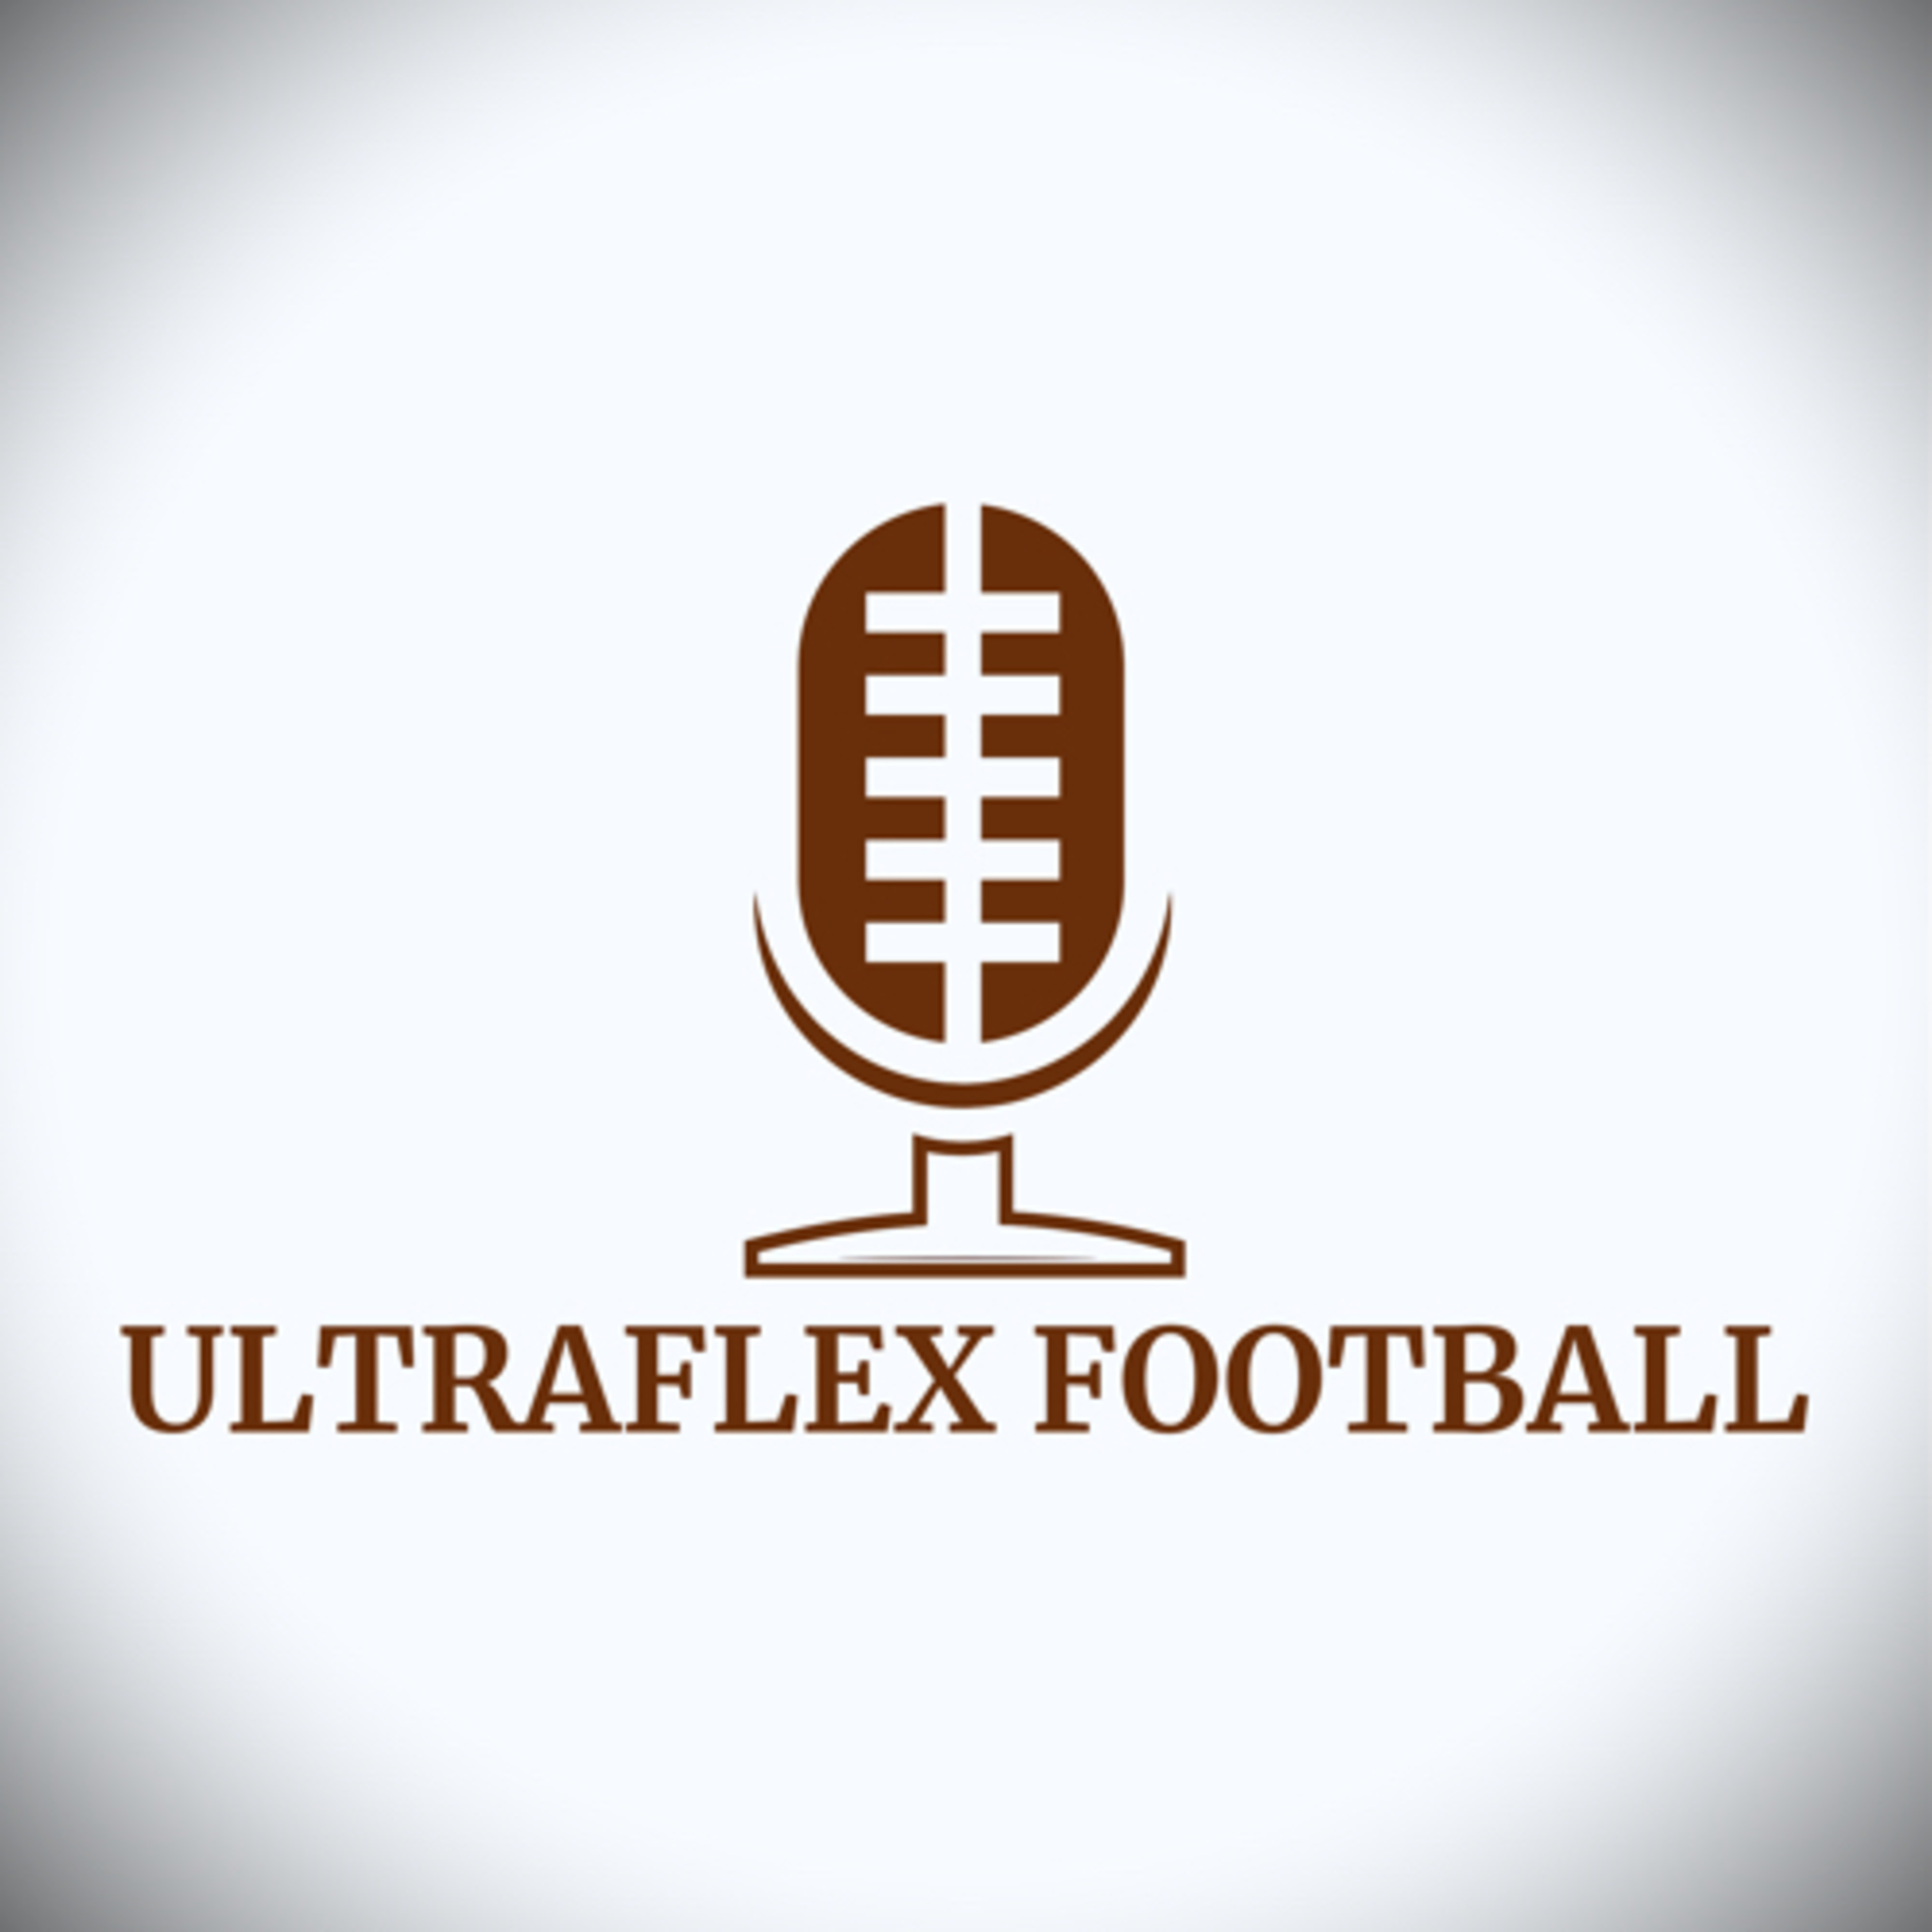 Ultraflex Football